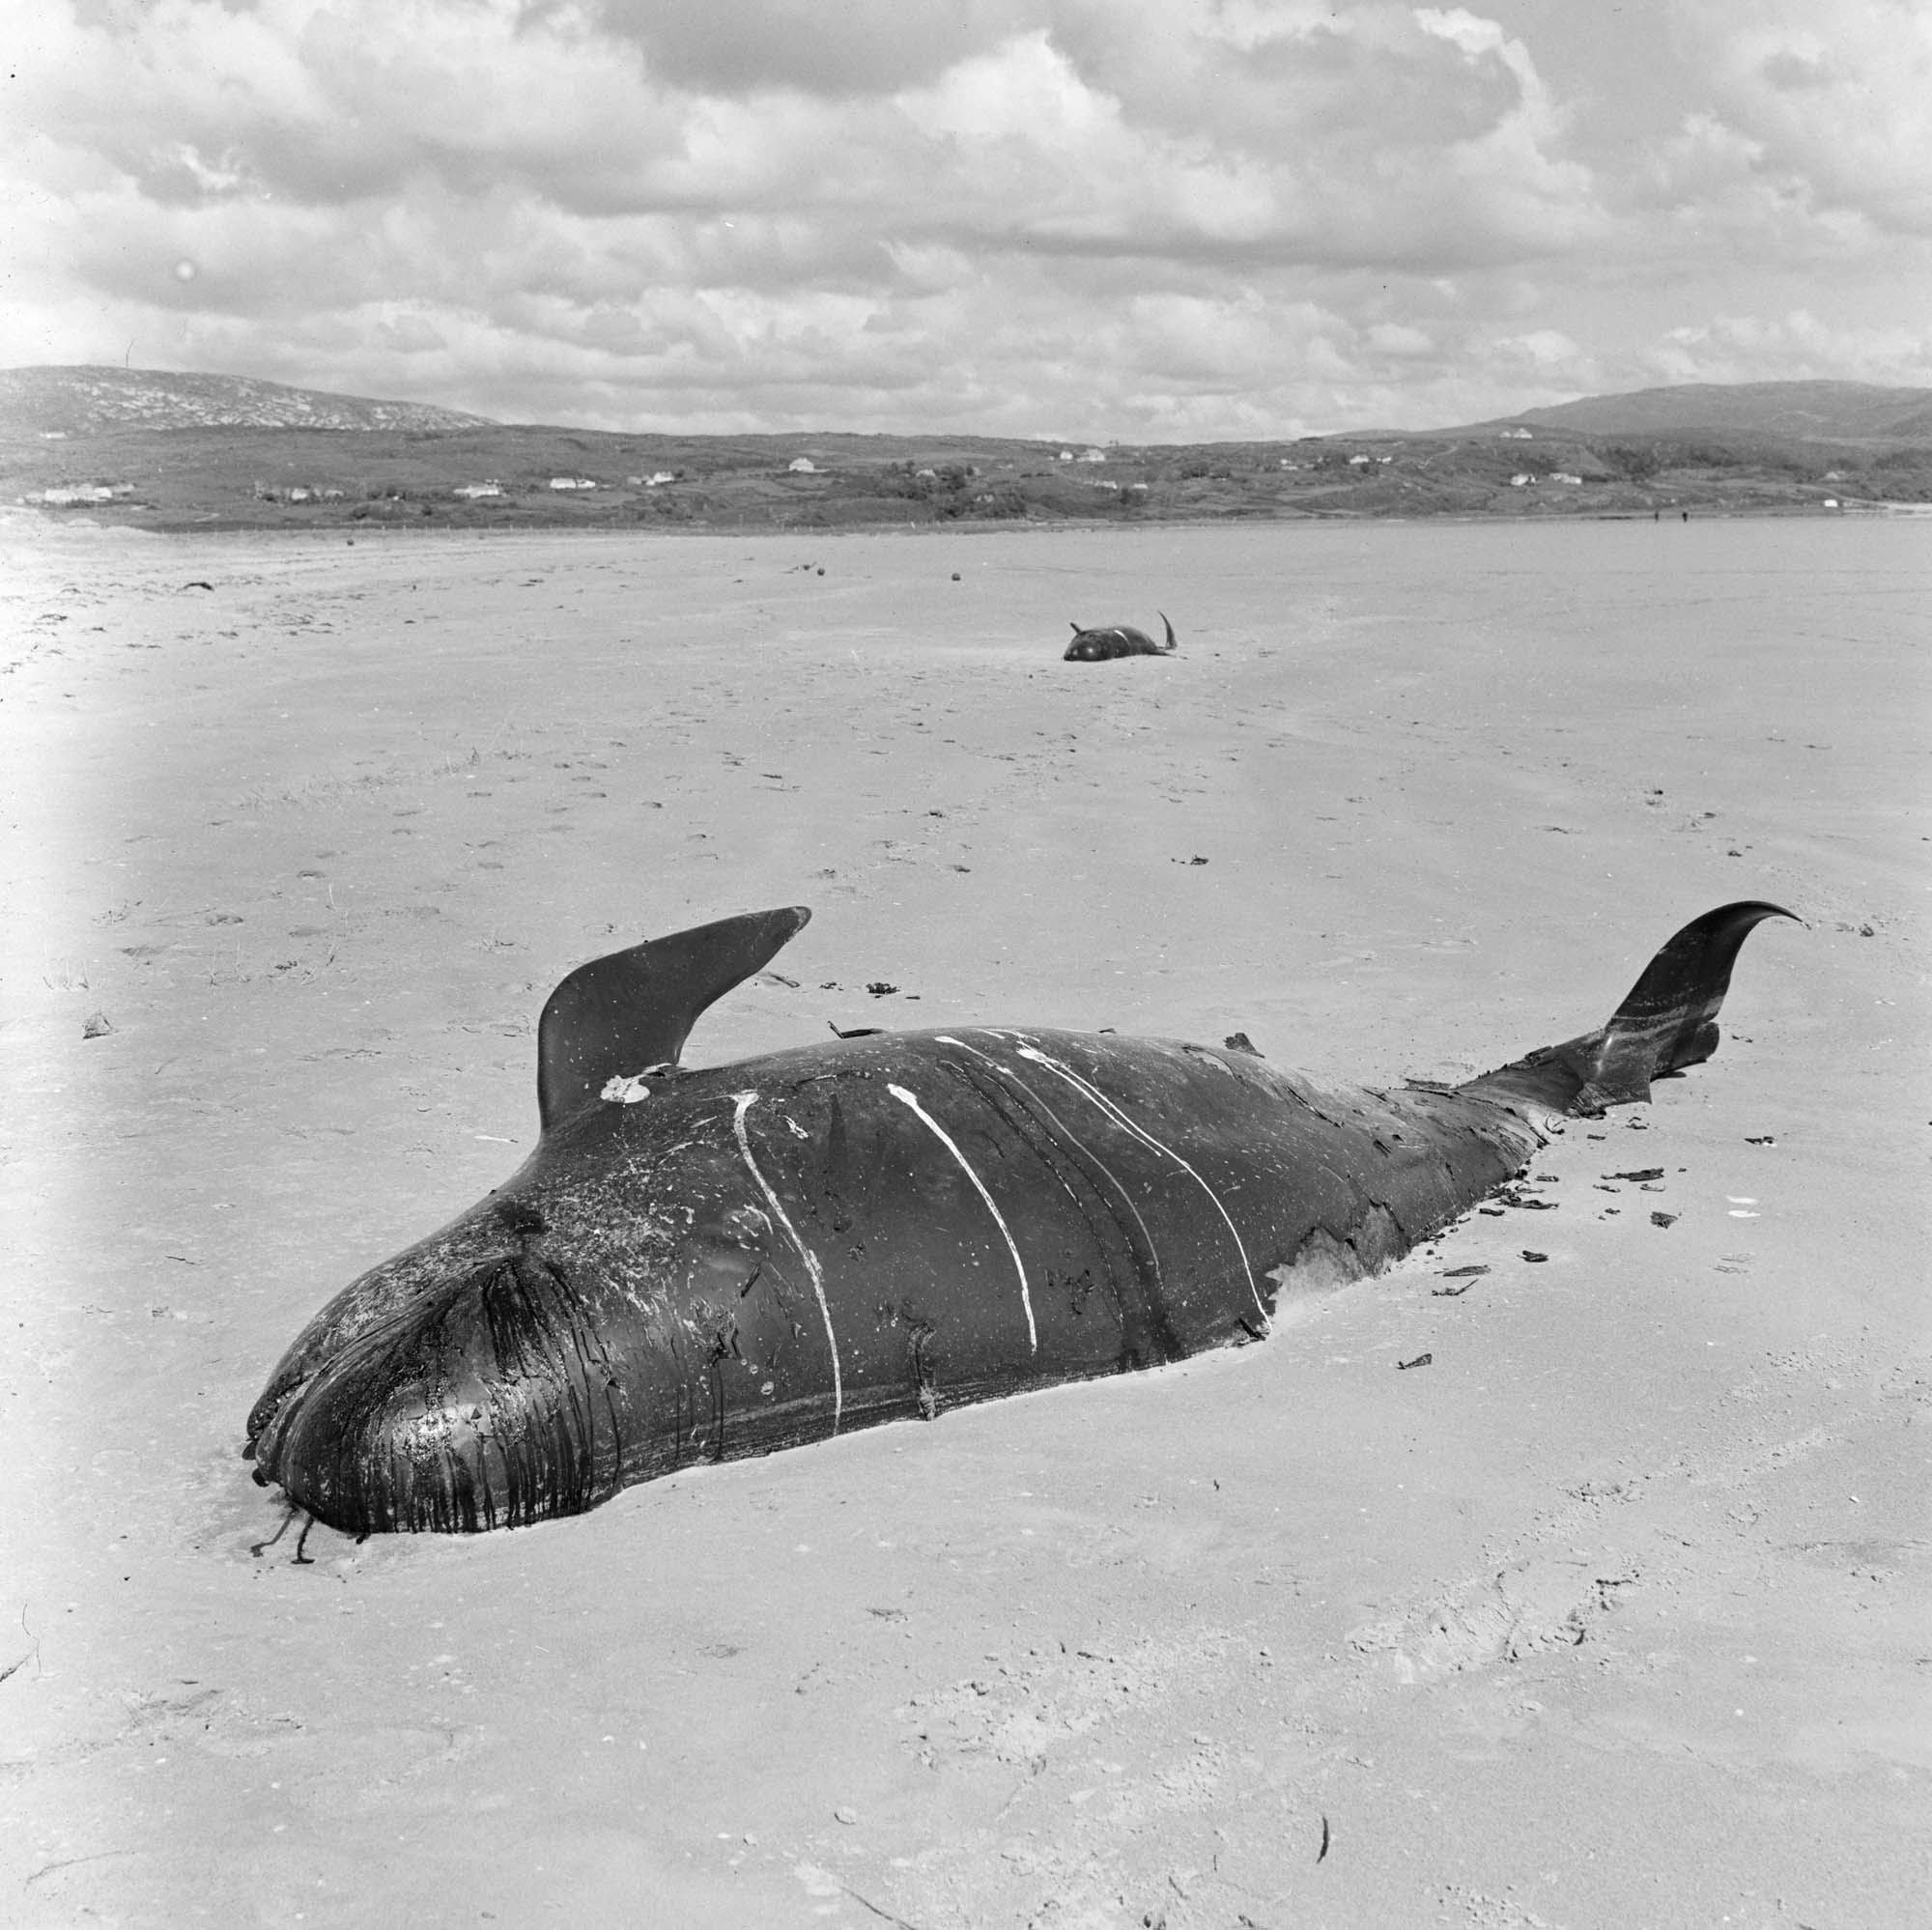 Dead whales on beach near Gweebarra Bay, Donegal